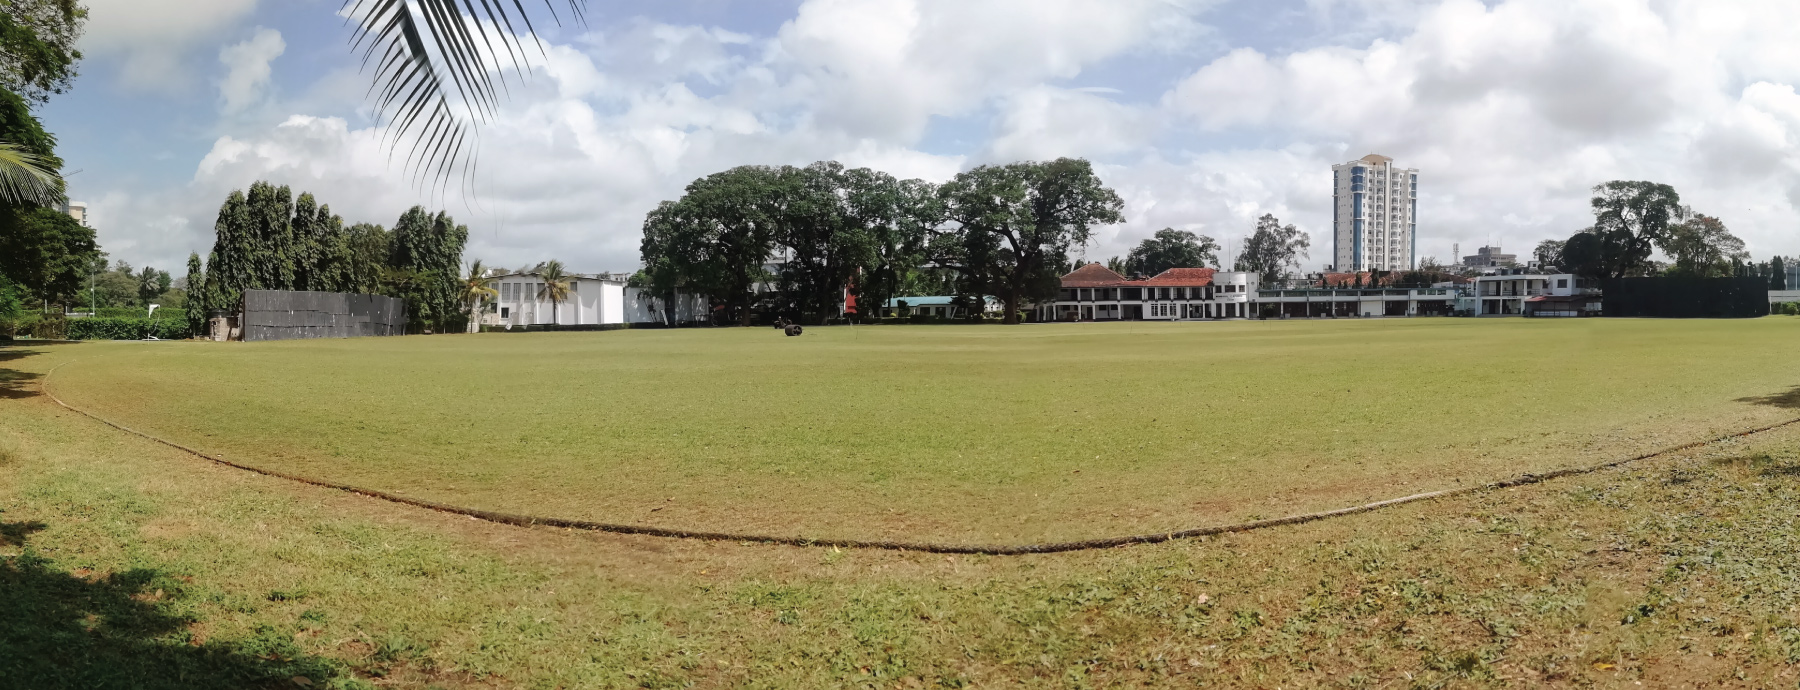 Mombasa Sports Club. ODI standard-Cricket Pitch